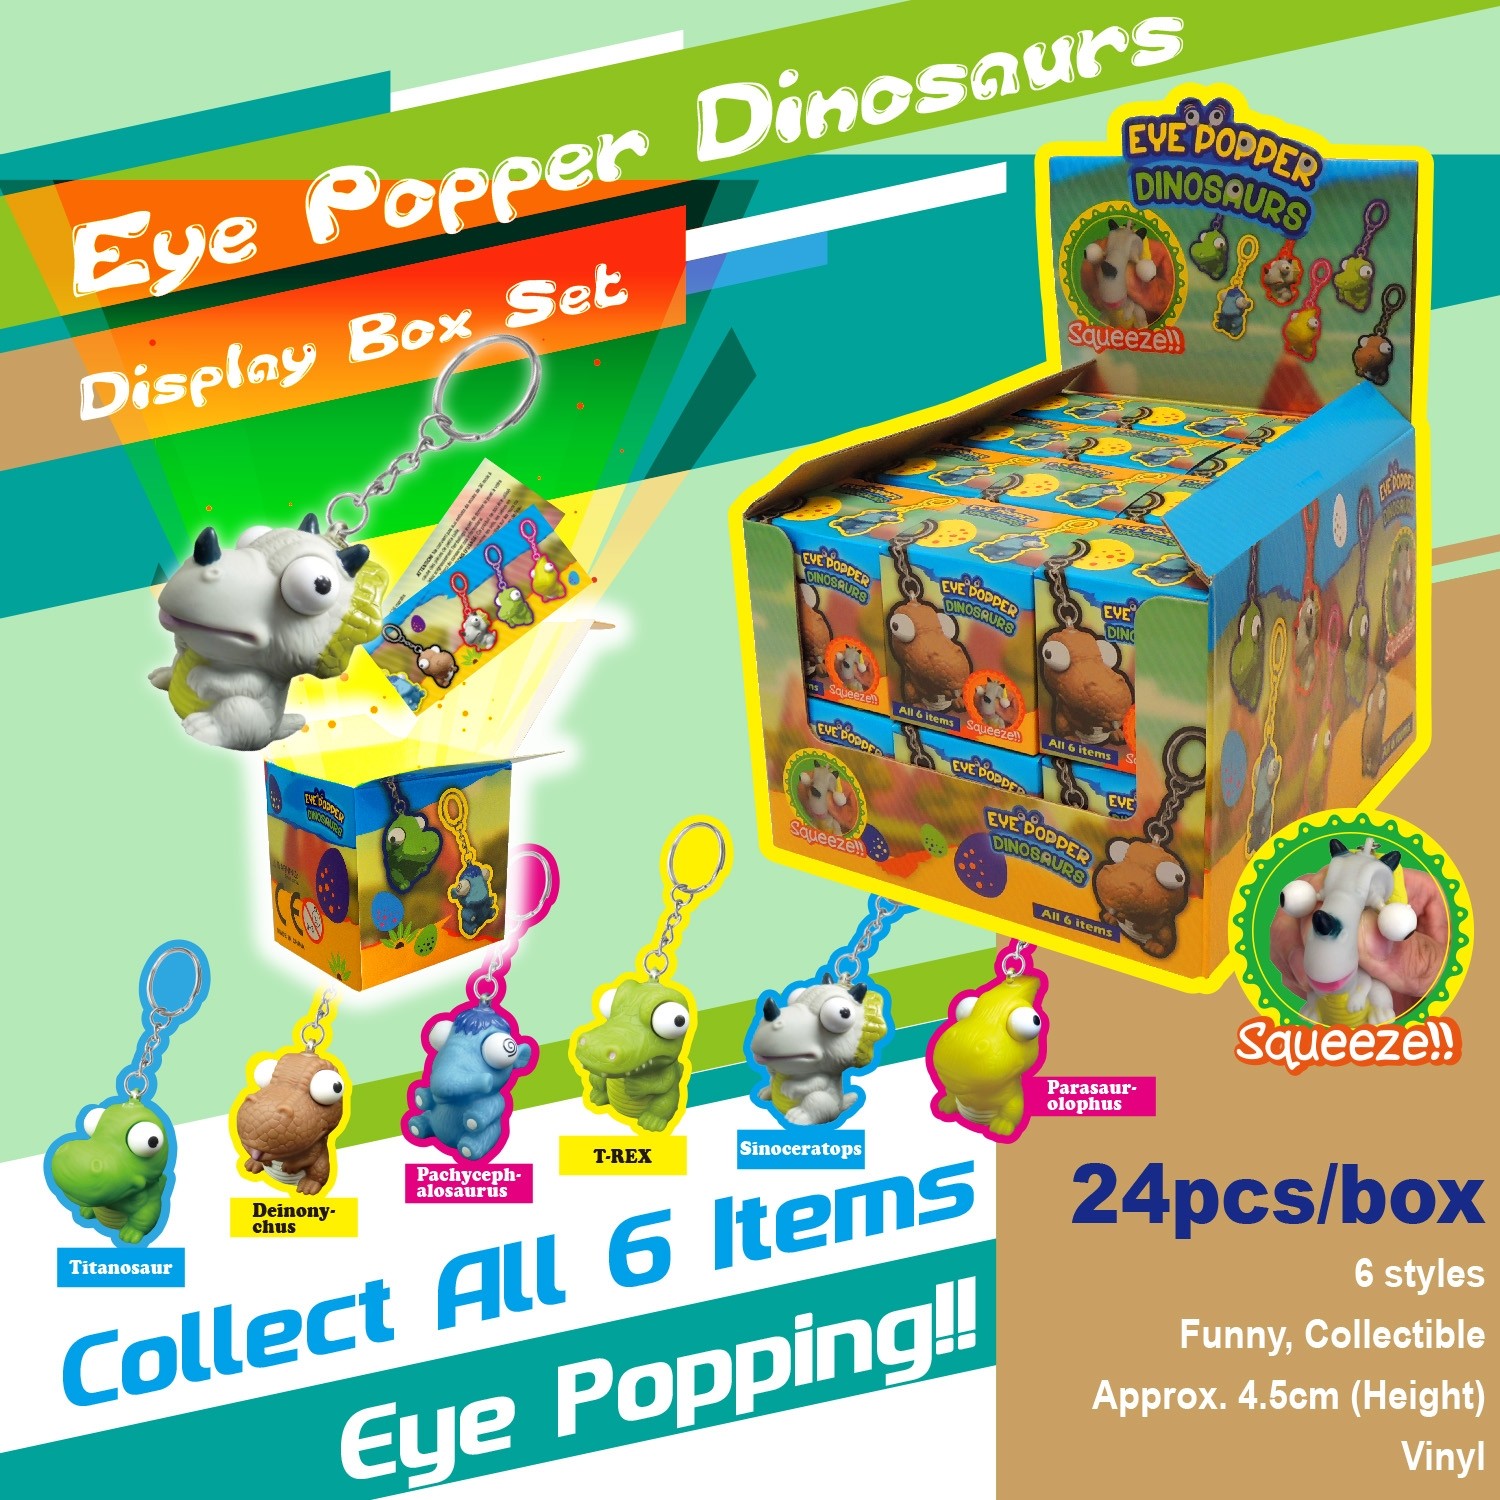 Eye Popper Dinosaurs Display Box